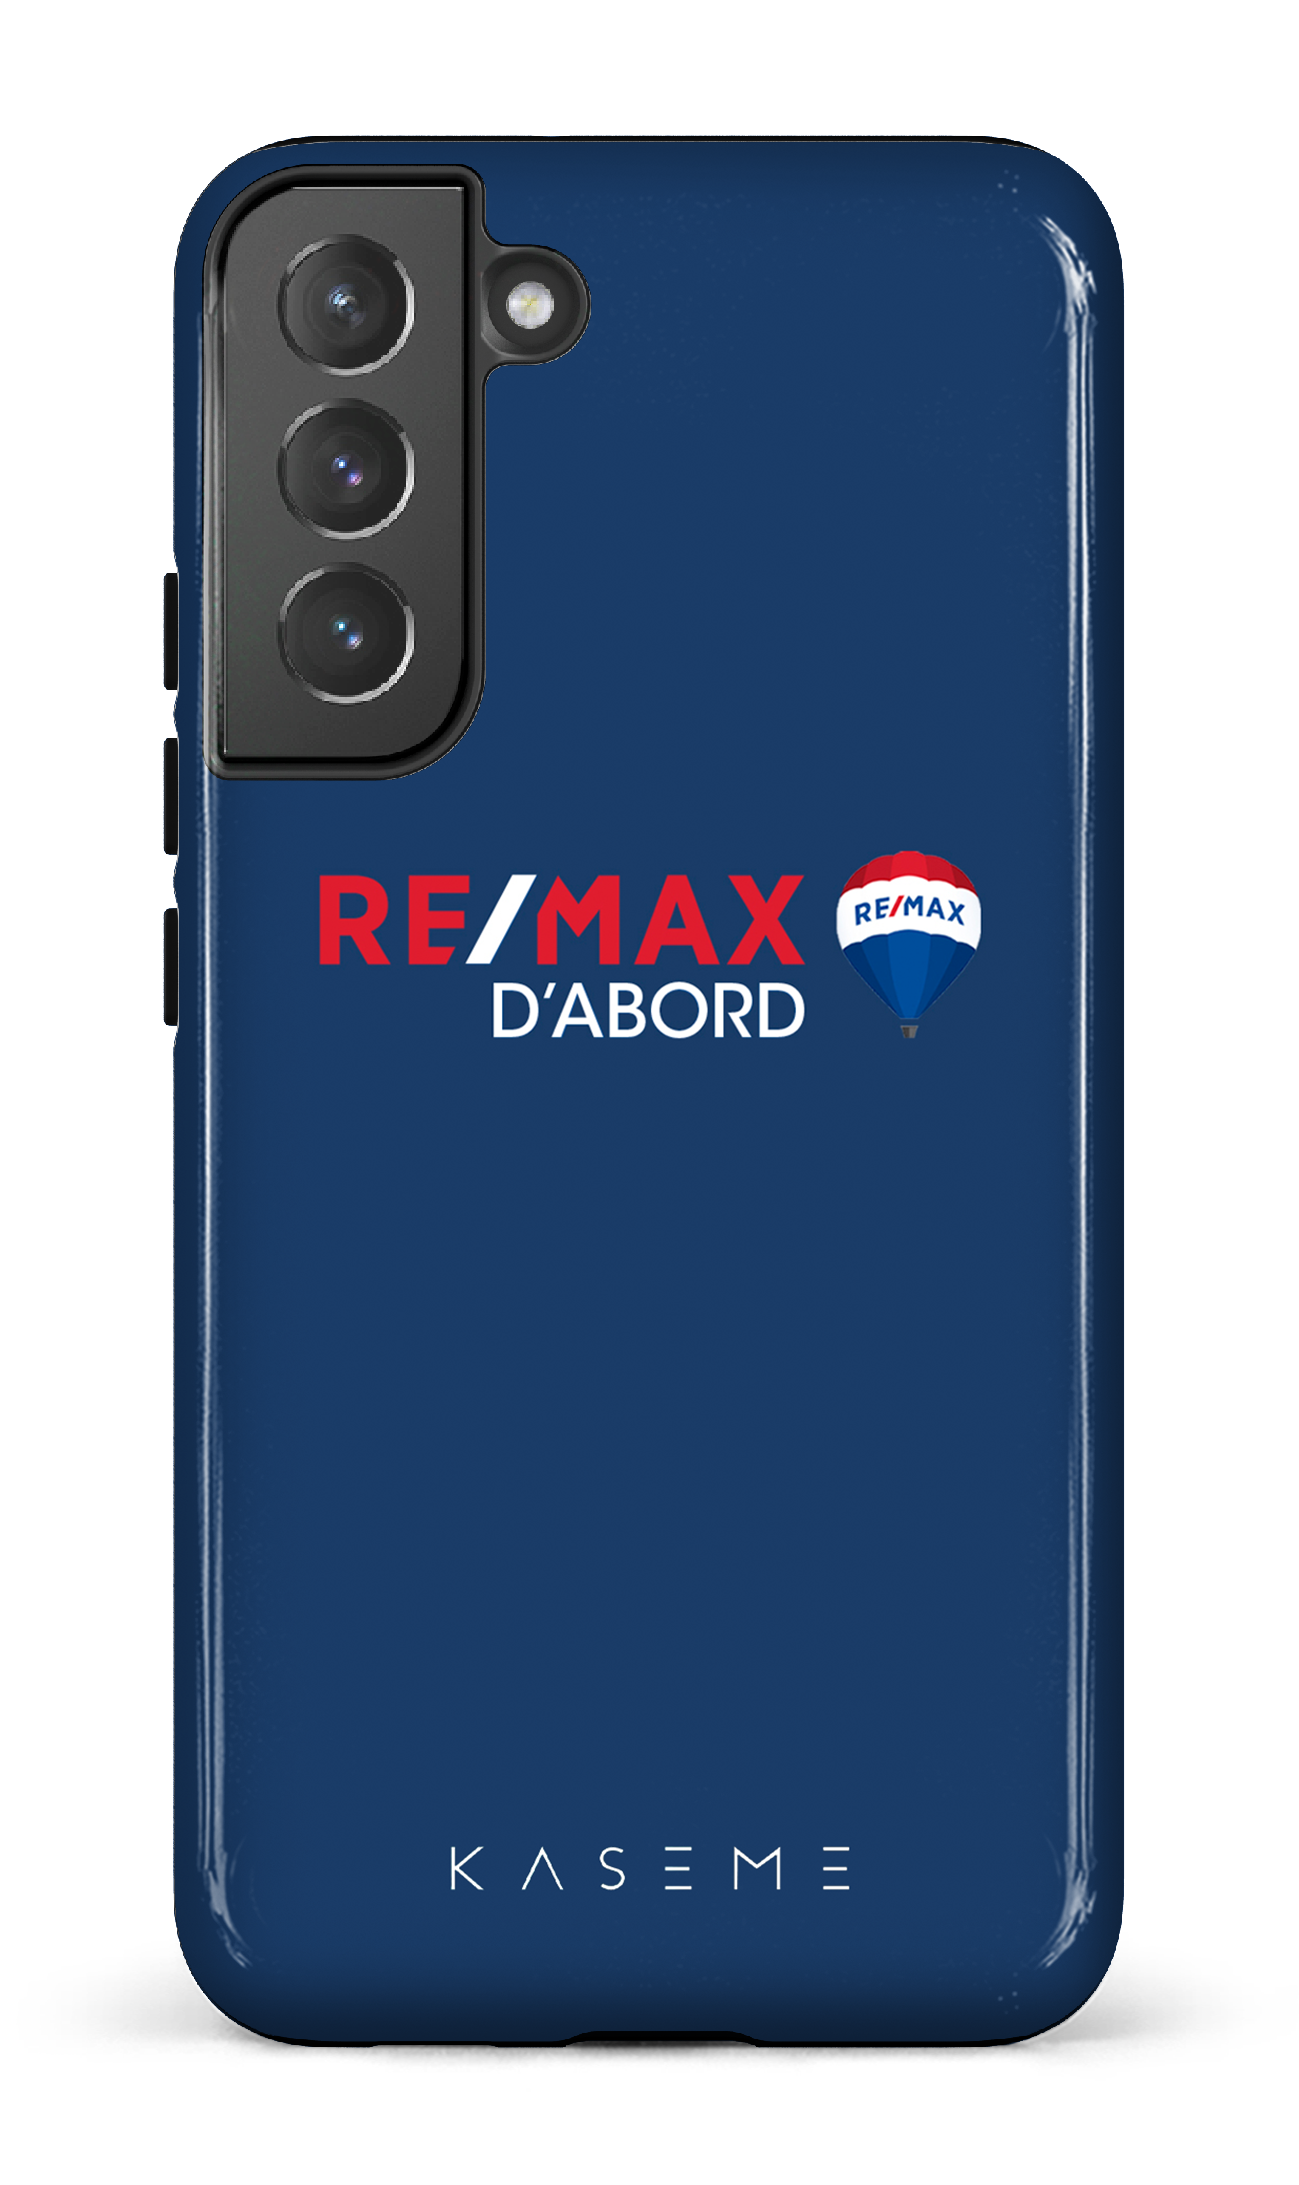 Remax D'abord Bleu - Galaxy S22 Plus